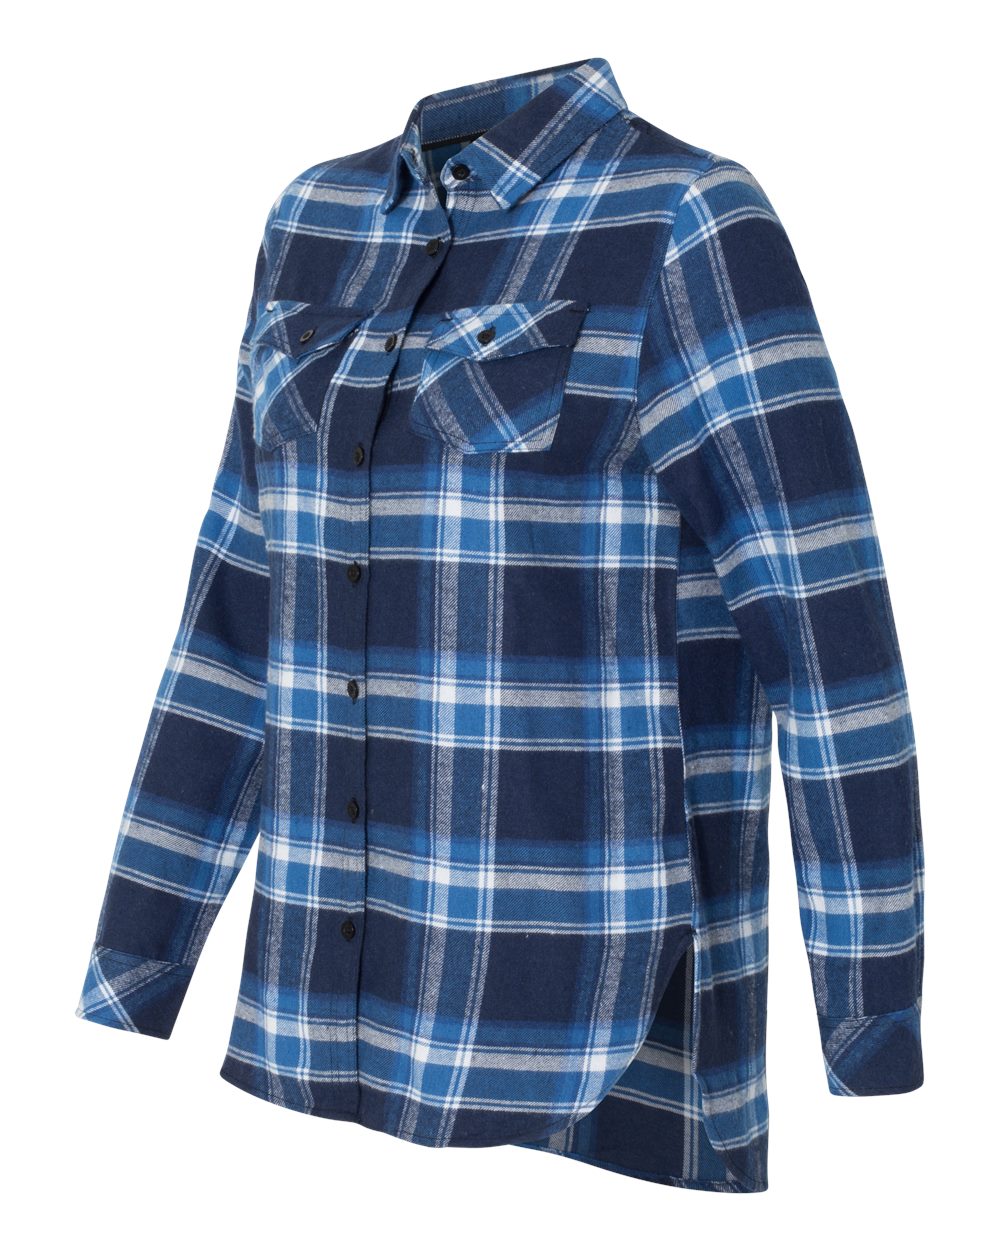 Burnside 5210 - Women's Yarn-Dyed Long Sleeve Flannel Shirt